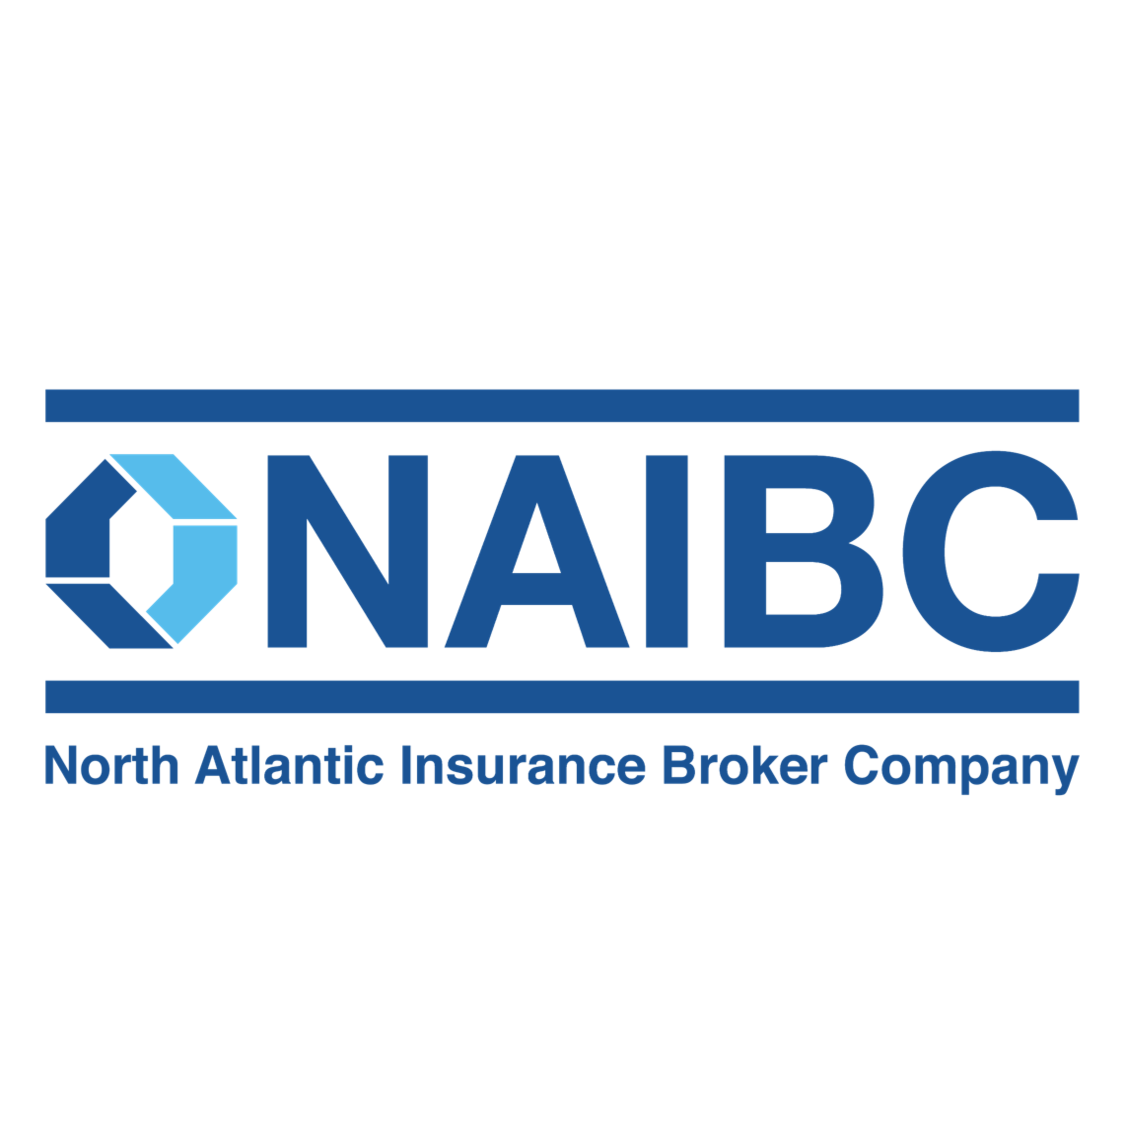 North Atlantic Insurance Broker Company (NAIBC)